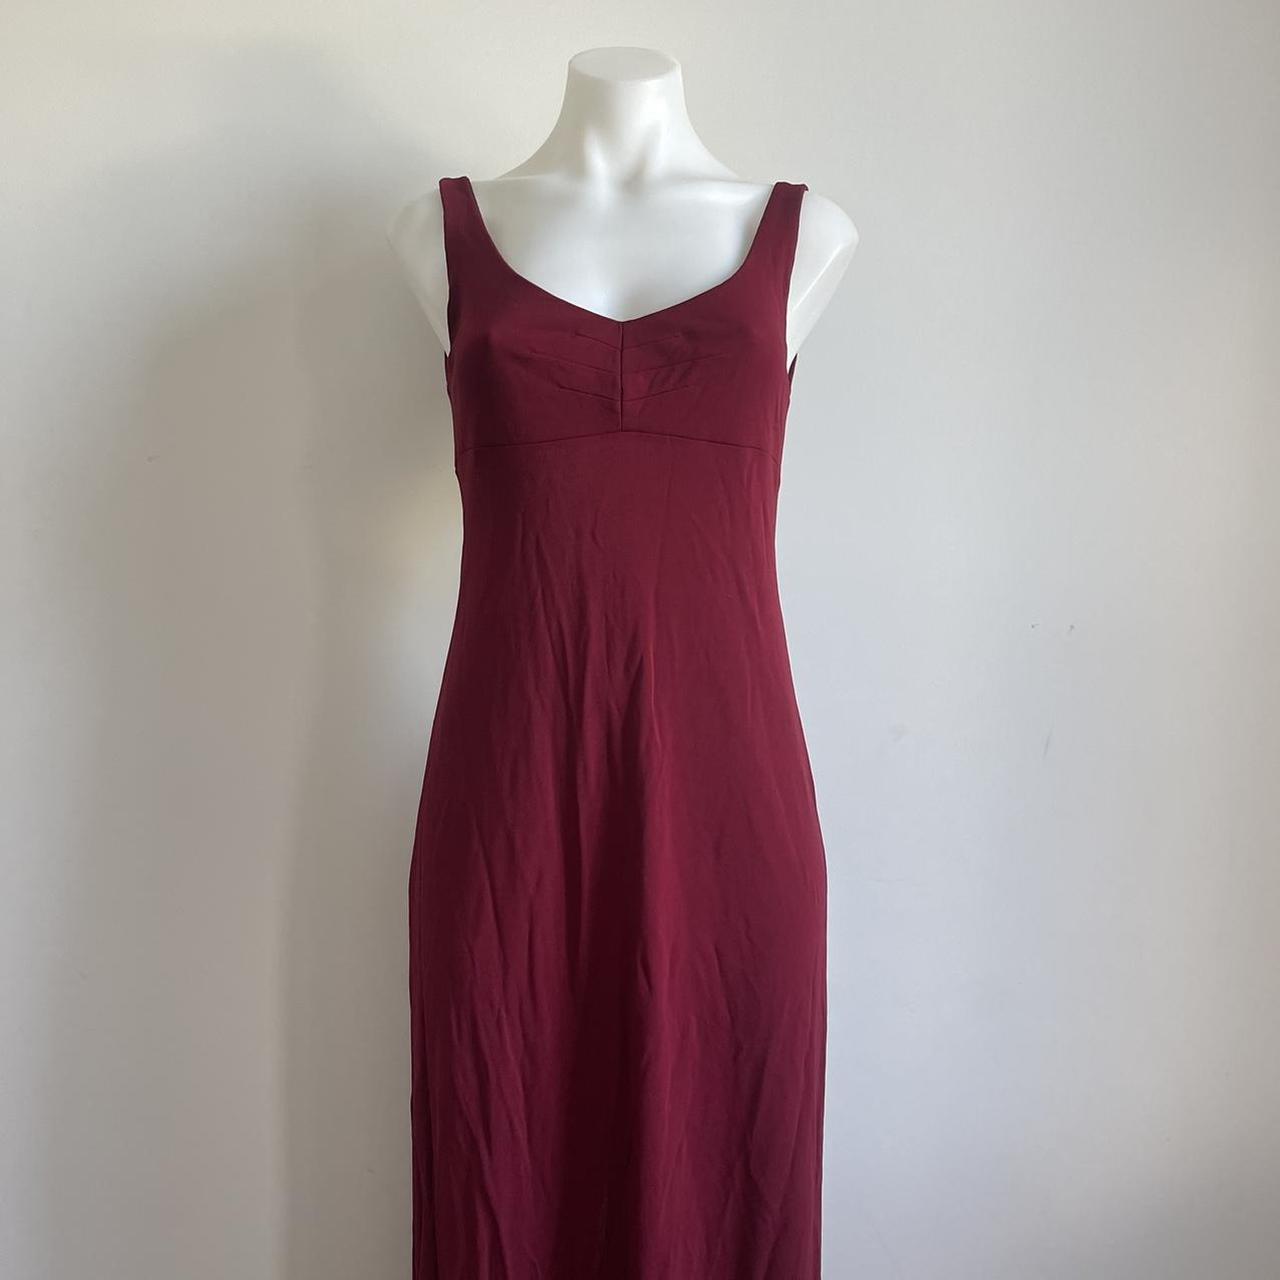 Women's Red and Burgundy Dress | Depop